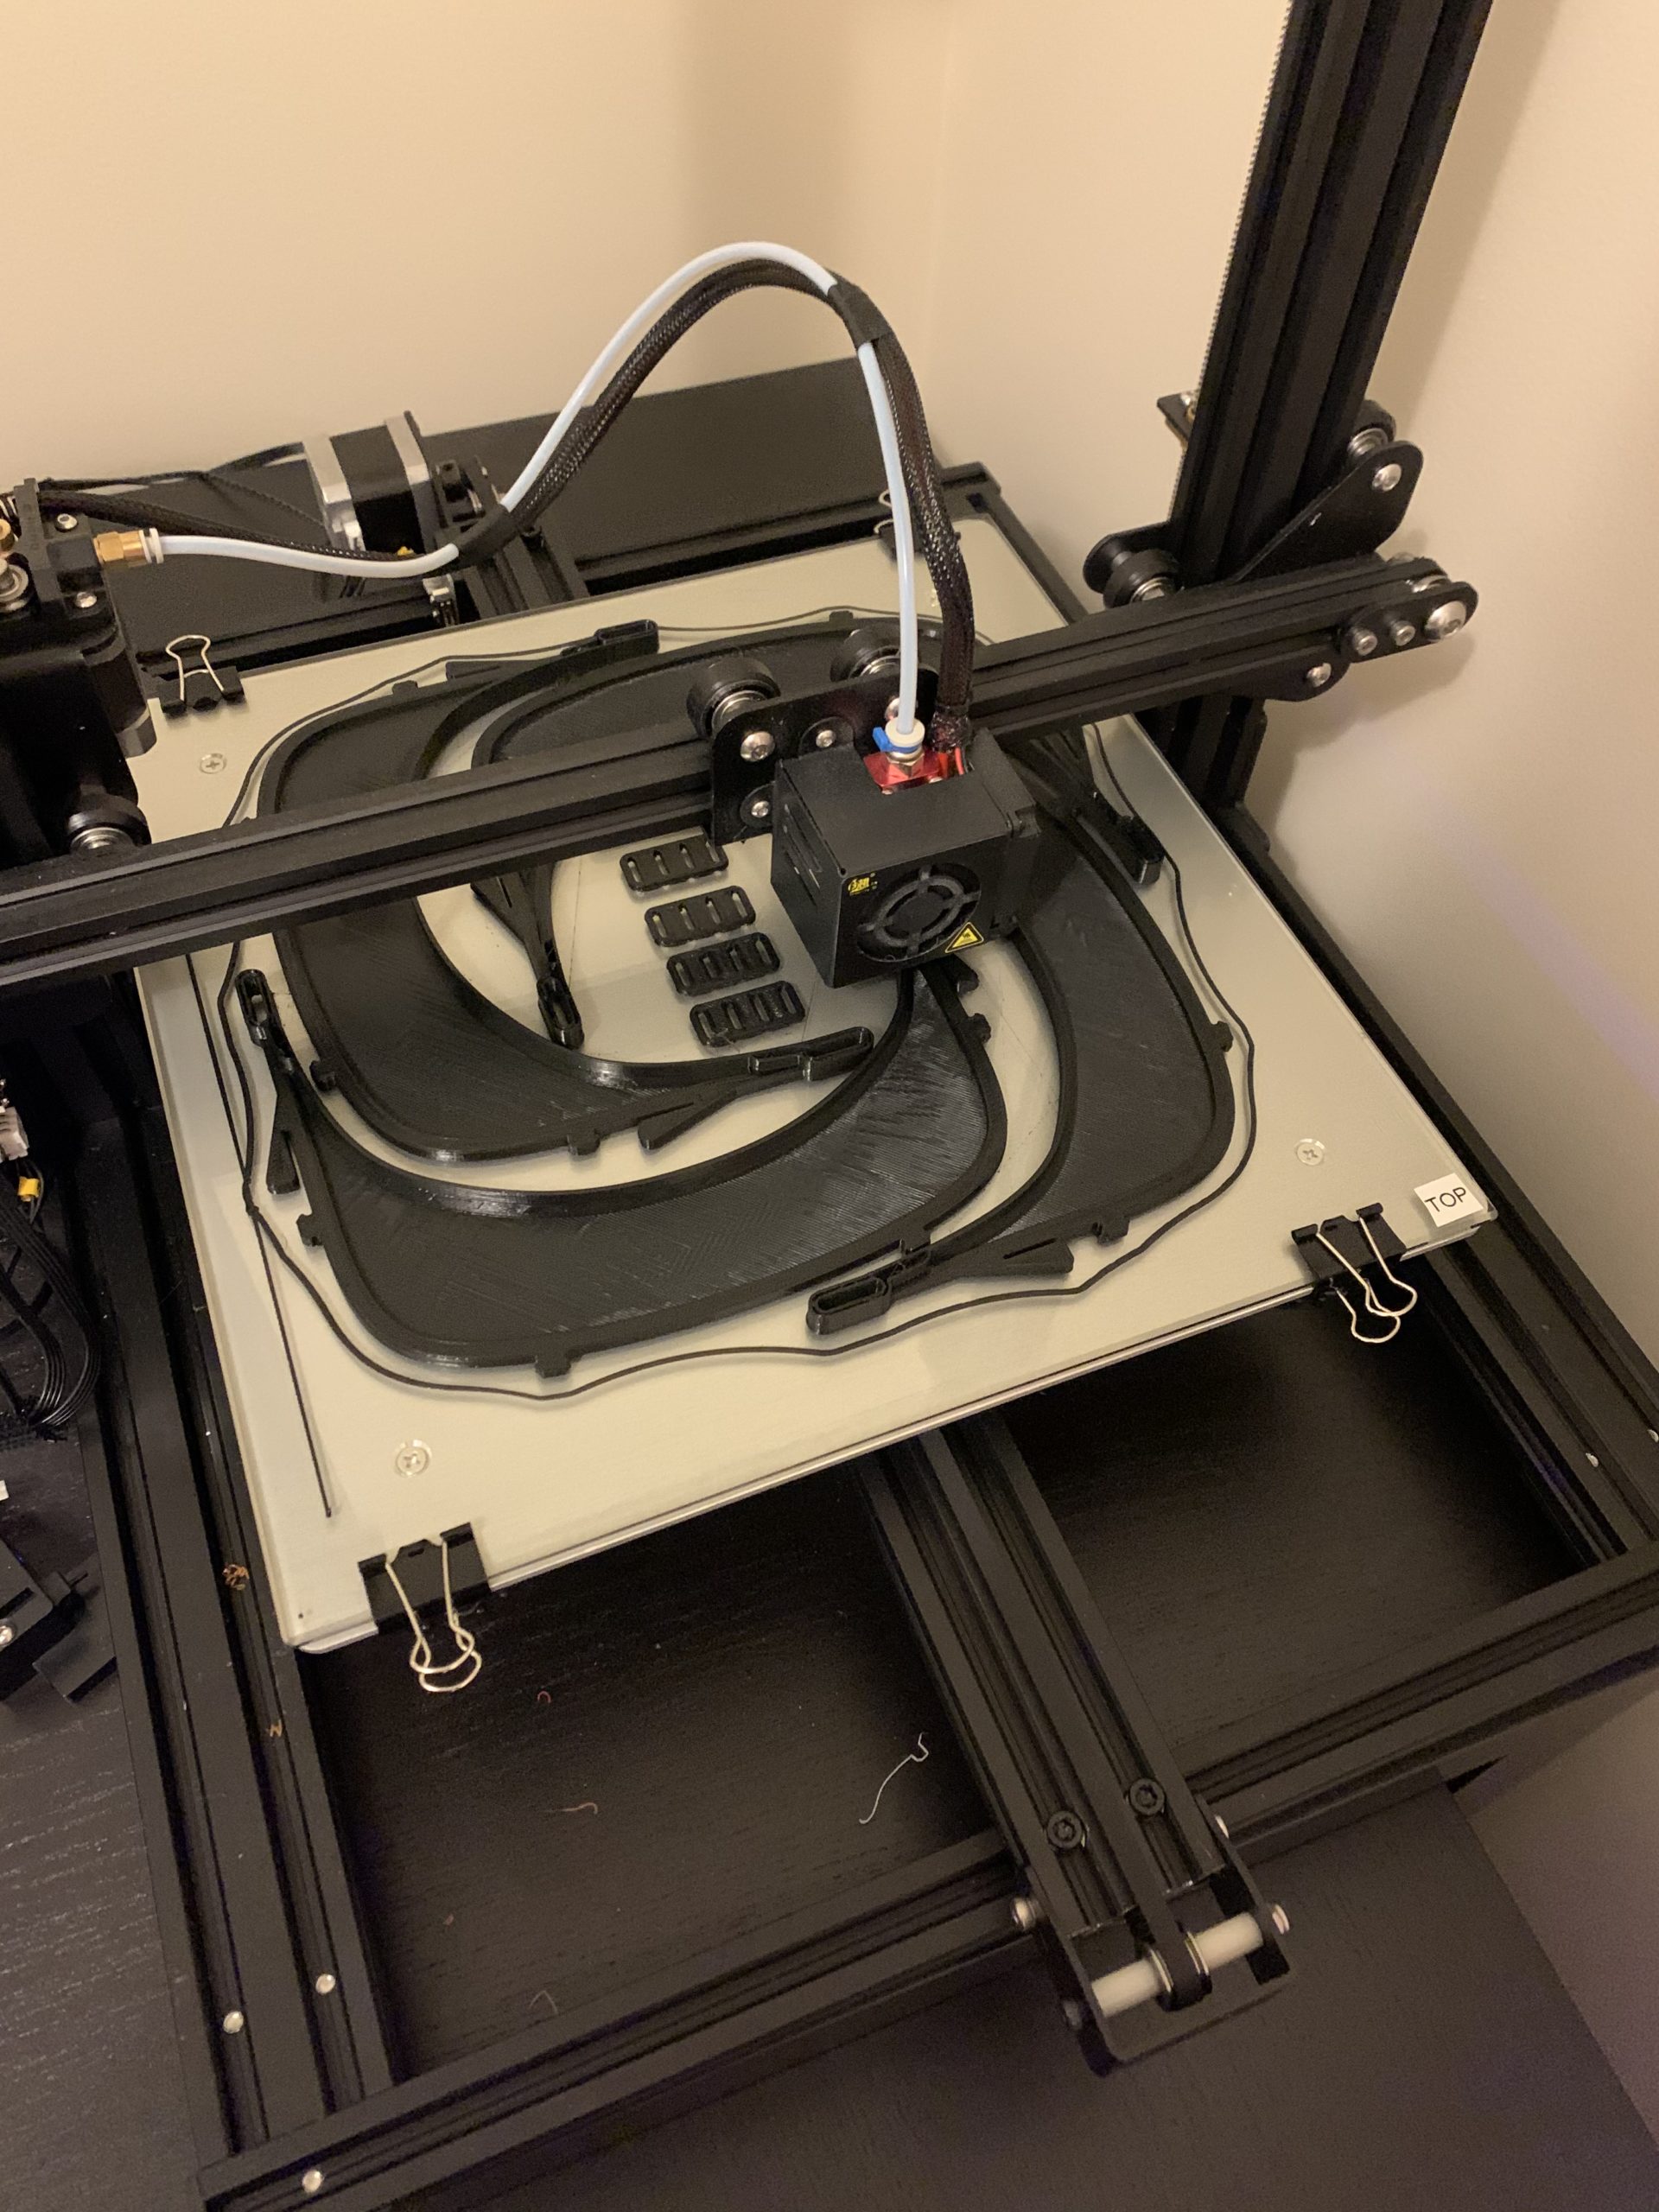 3D Printer printing face shields